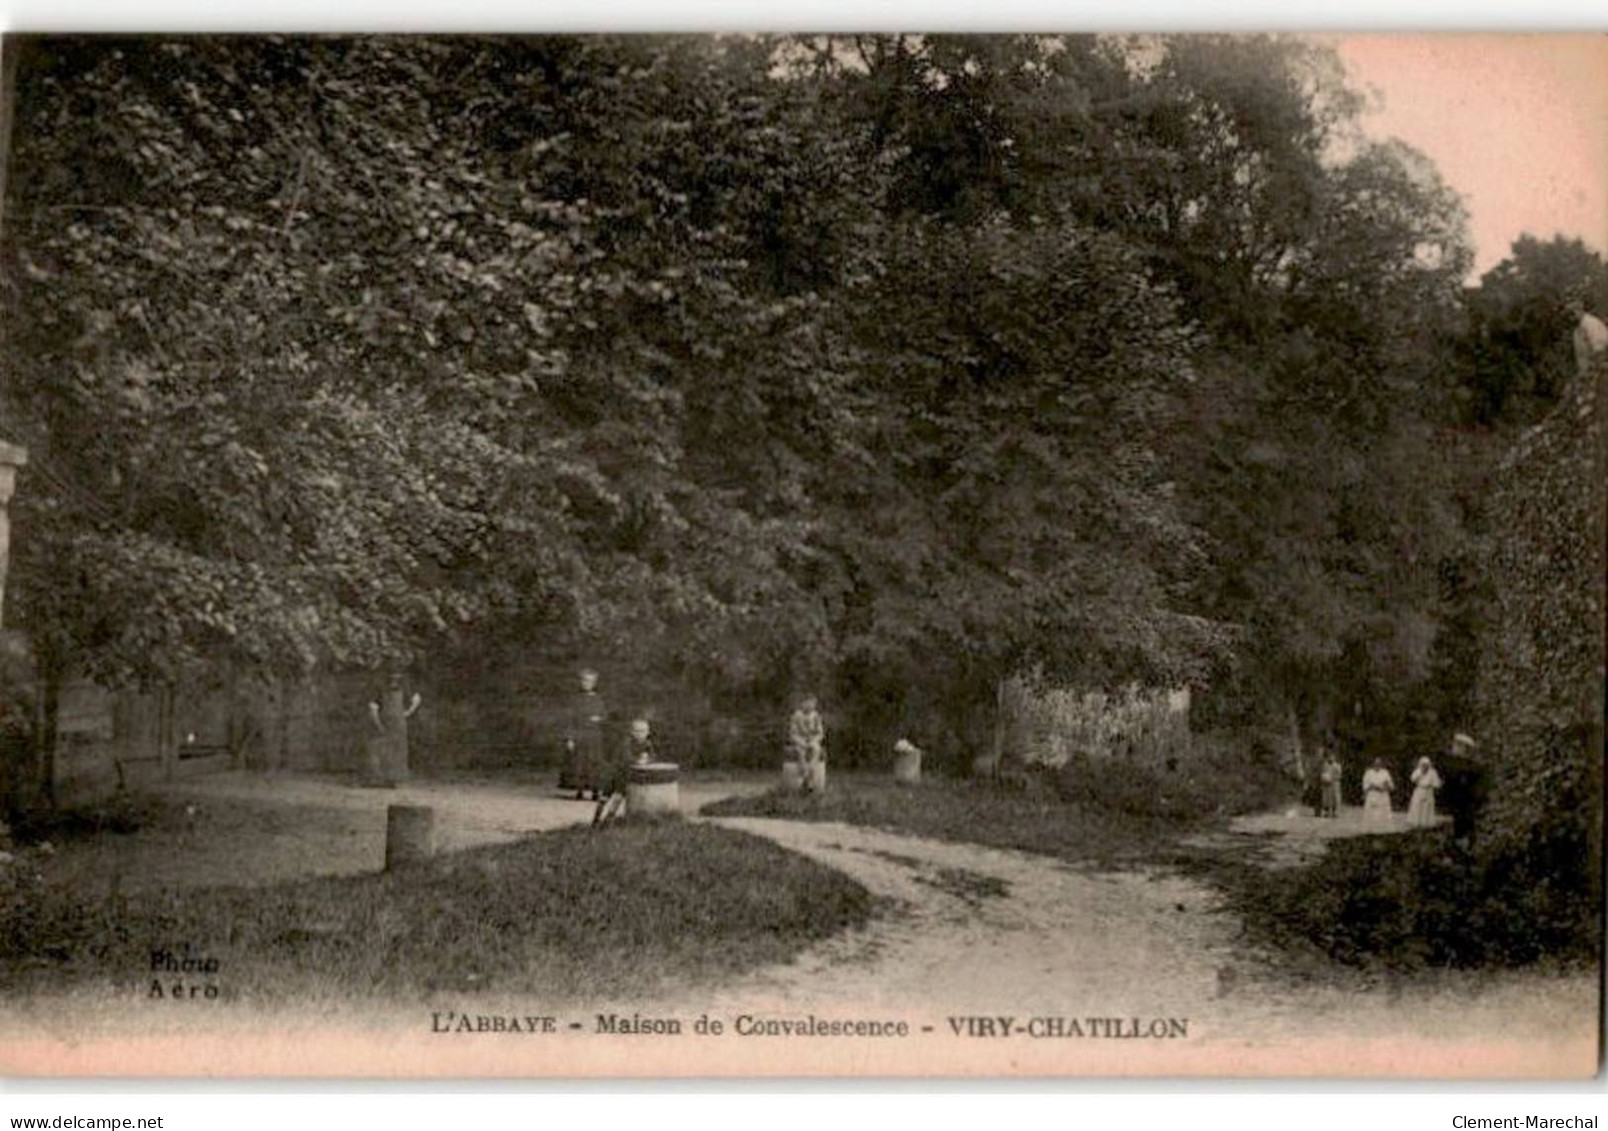 VIRY-CHATILLON: Maison De Convalescence, L'abbaye - Très Bon état - Viry-Châtillon